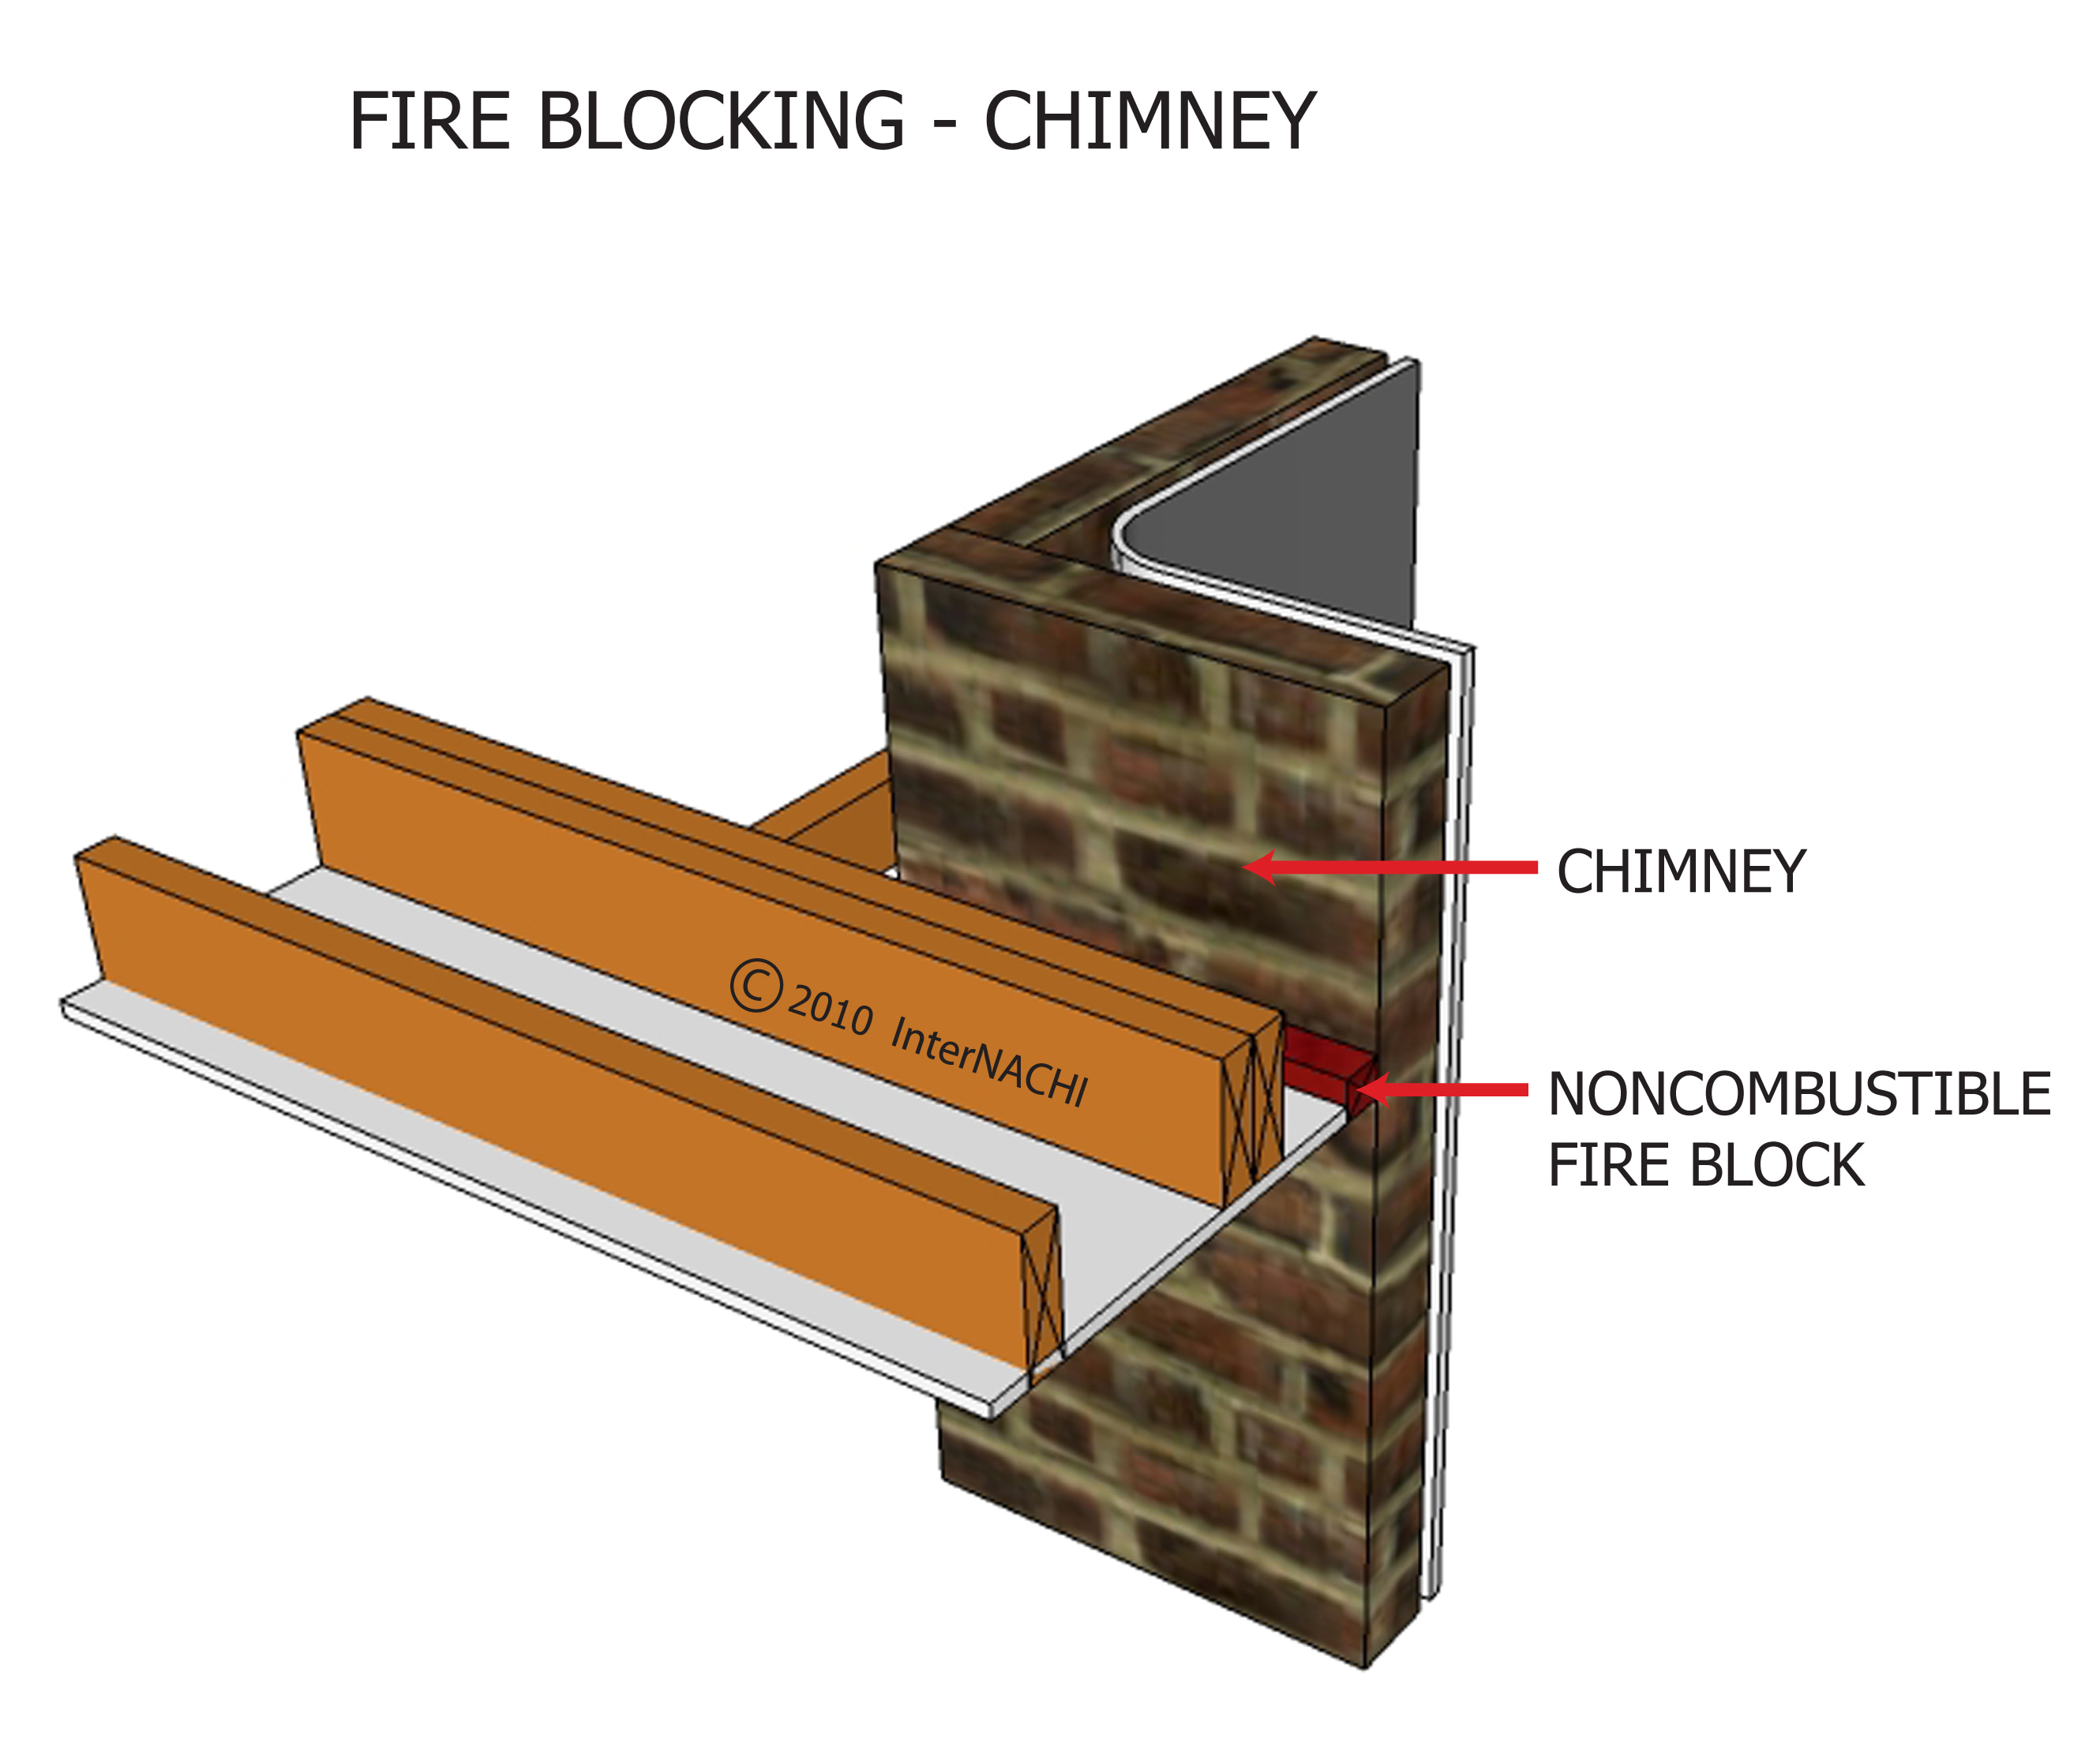 Fire blocking - chimney.